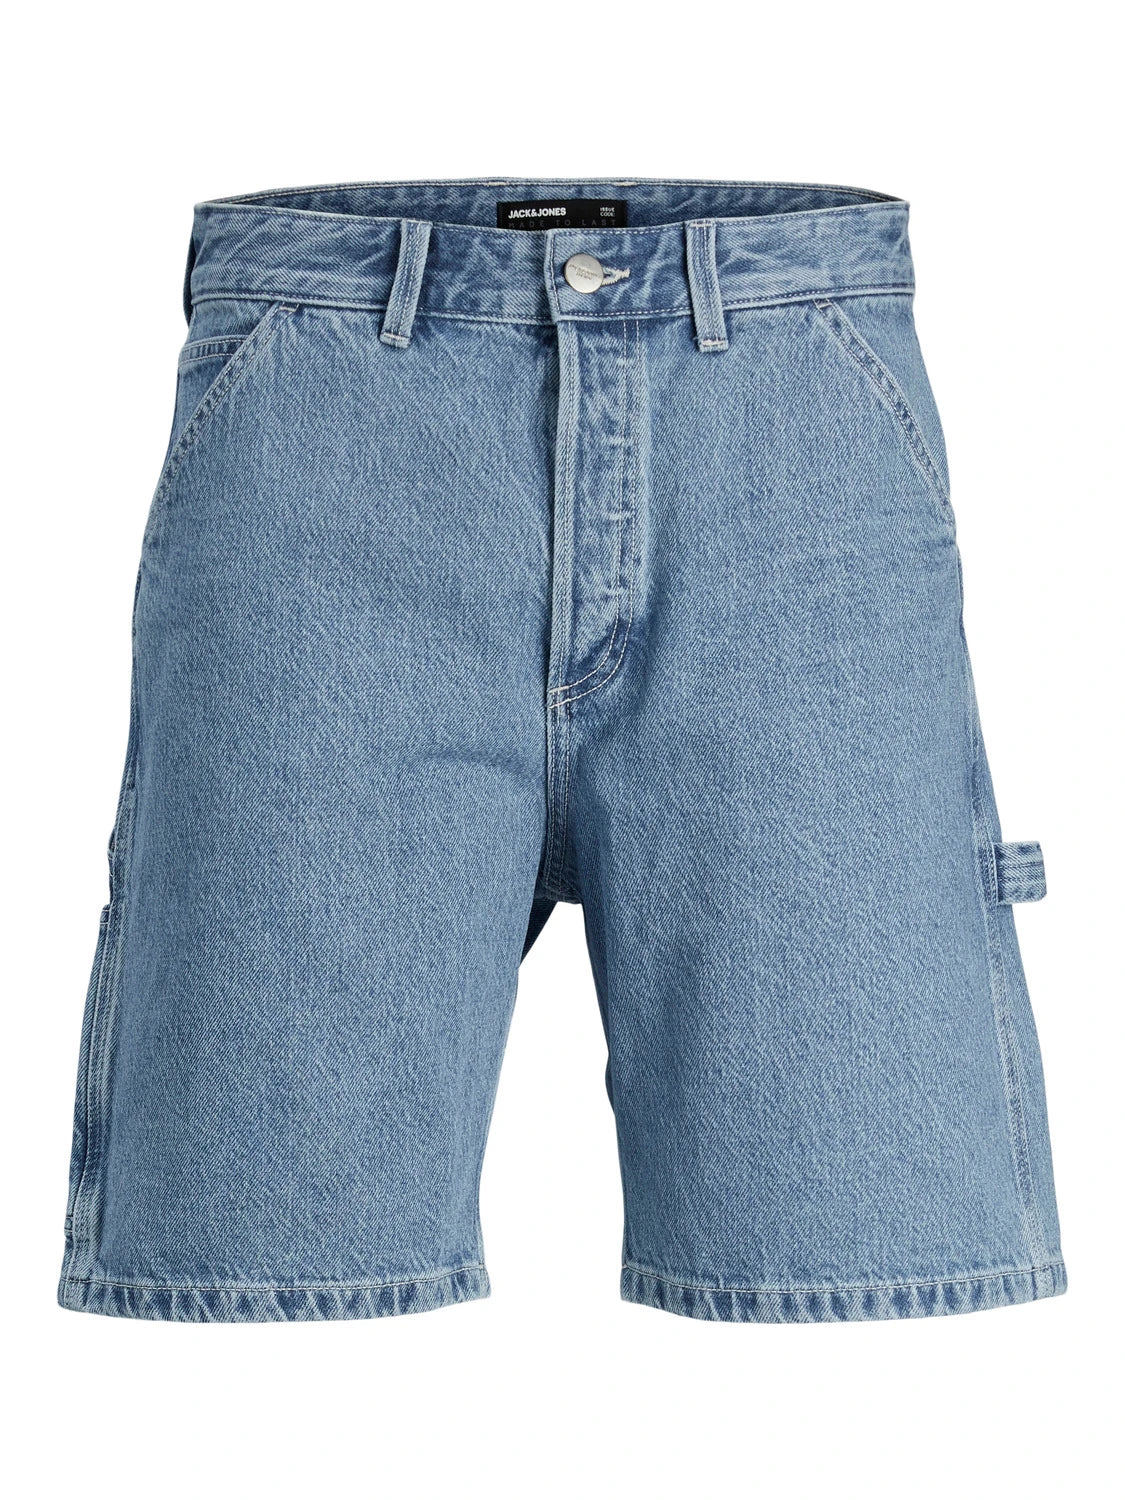 Jack & Jones | Loose Fit Jeans Shorts | B-15 Blue Denim